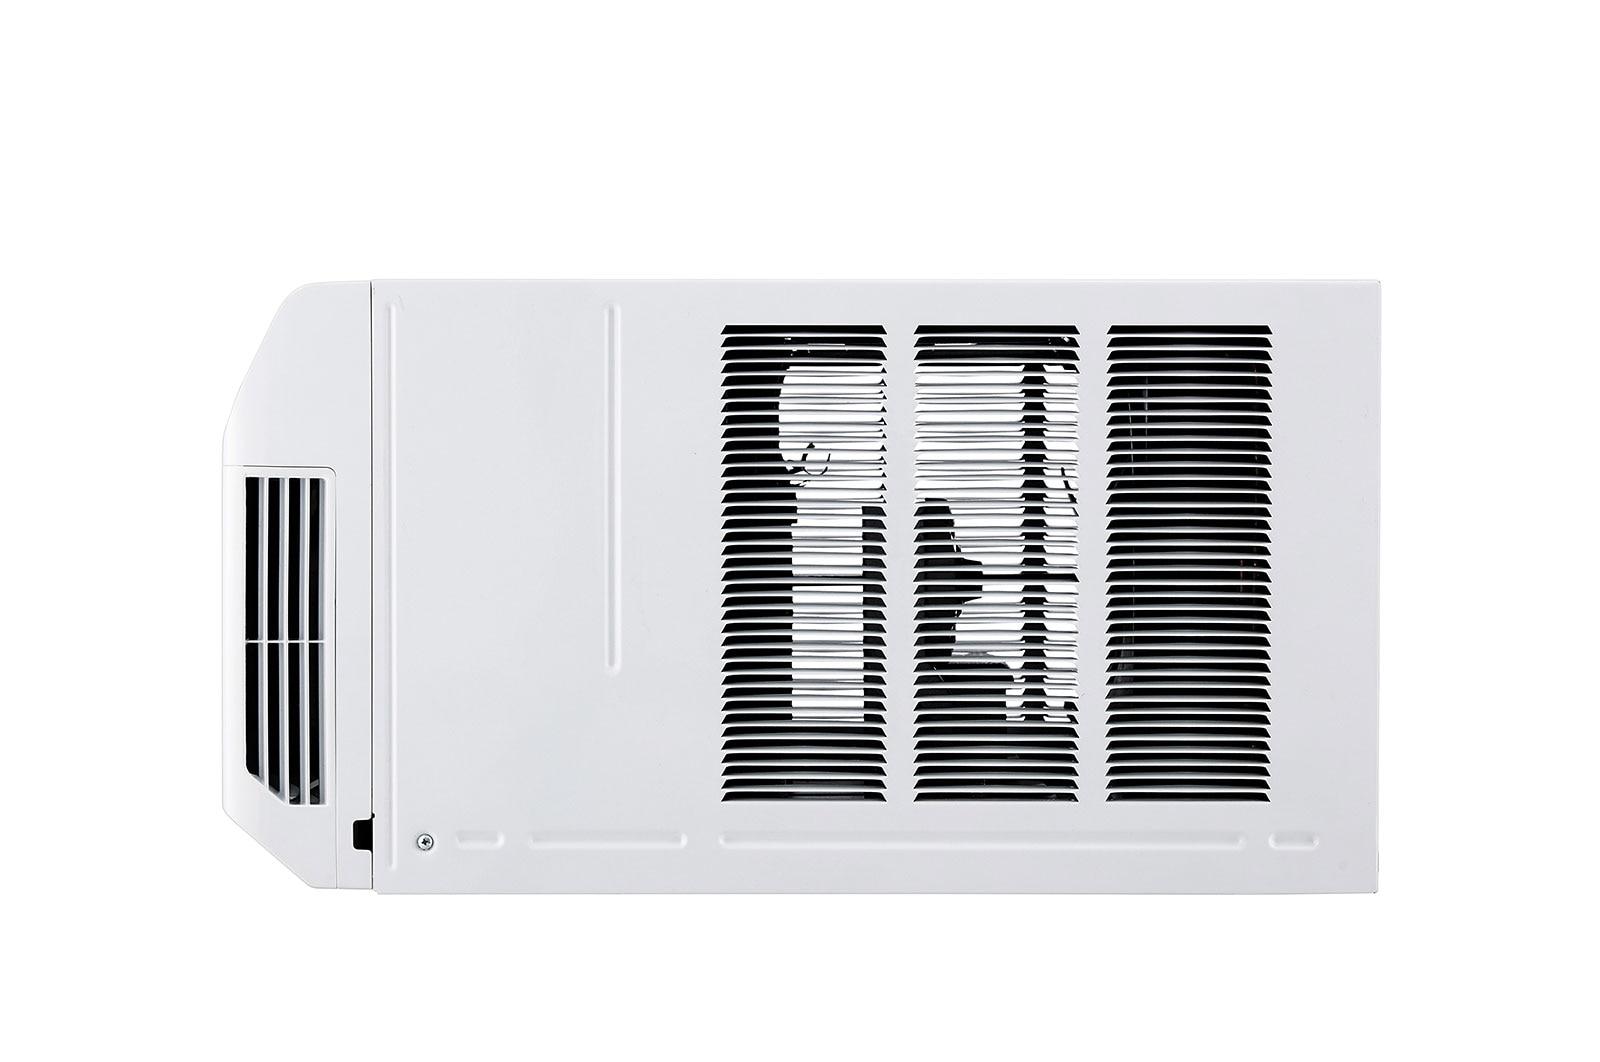 Lg LW1522IVSM 14,000 Btu Dual Inverter Smart Wi-Fi Enabled Window Air Conditioner